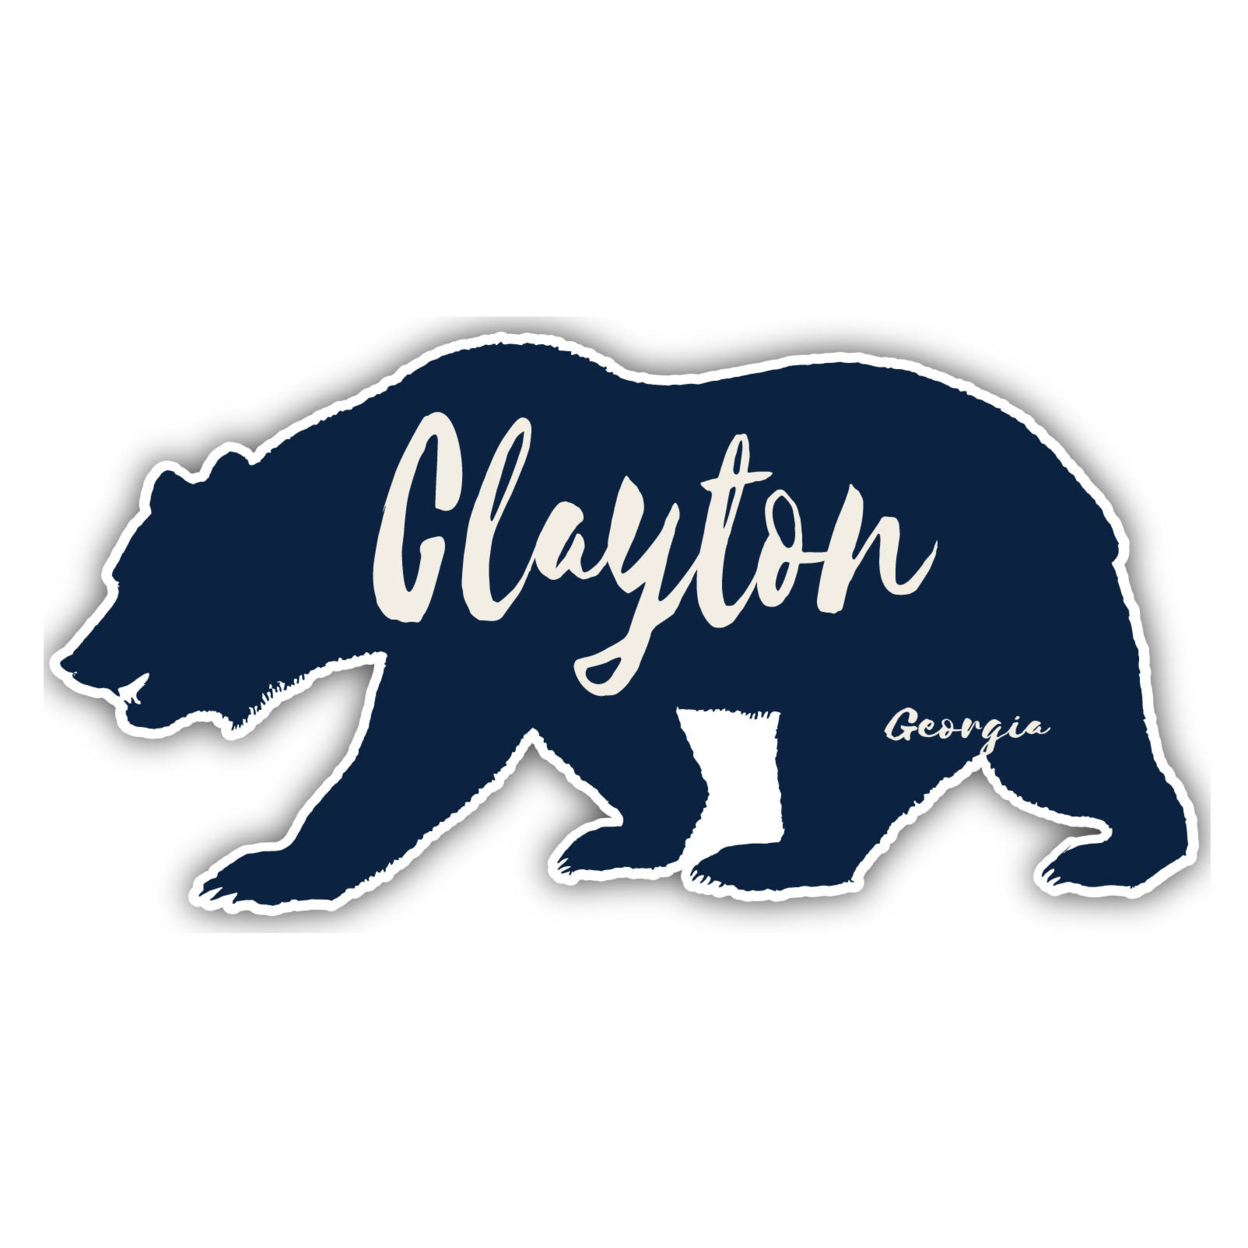 Clayton Georgia Souvenir Decorative Stickers (Choose Theme And Size) - Single Unit, 6-Inch, Bear